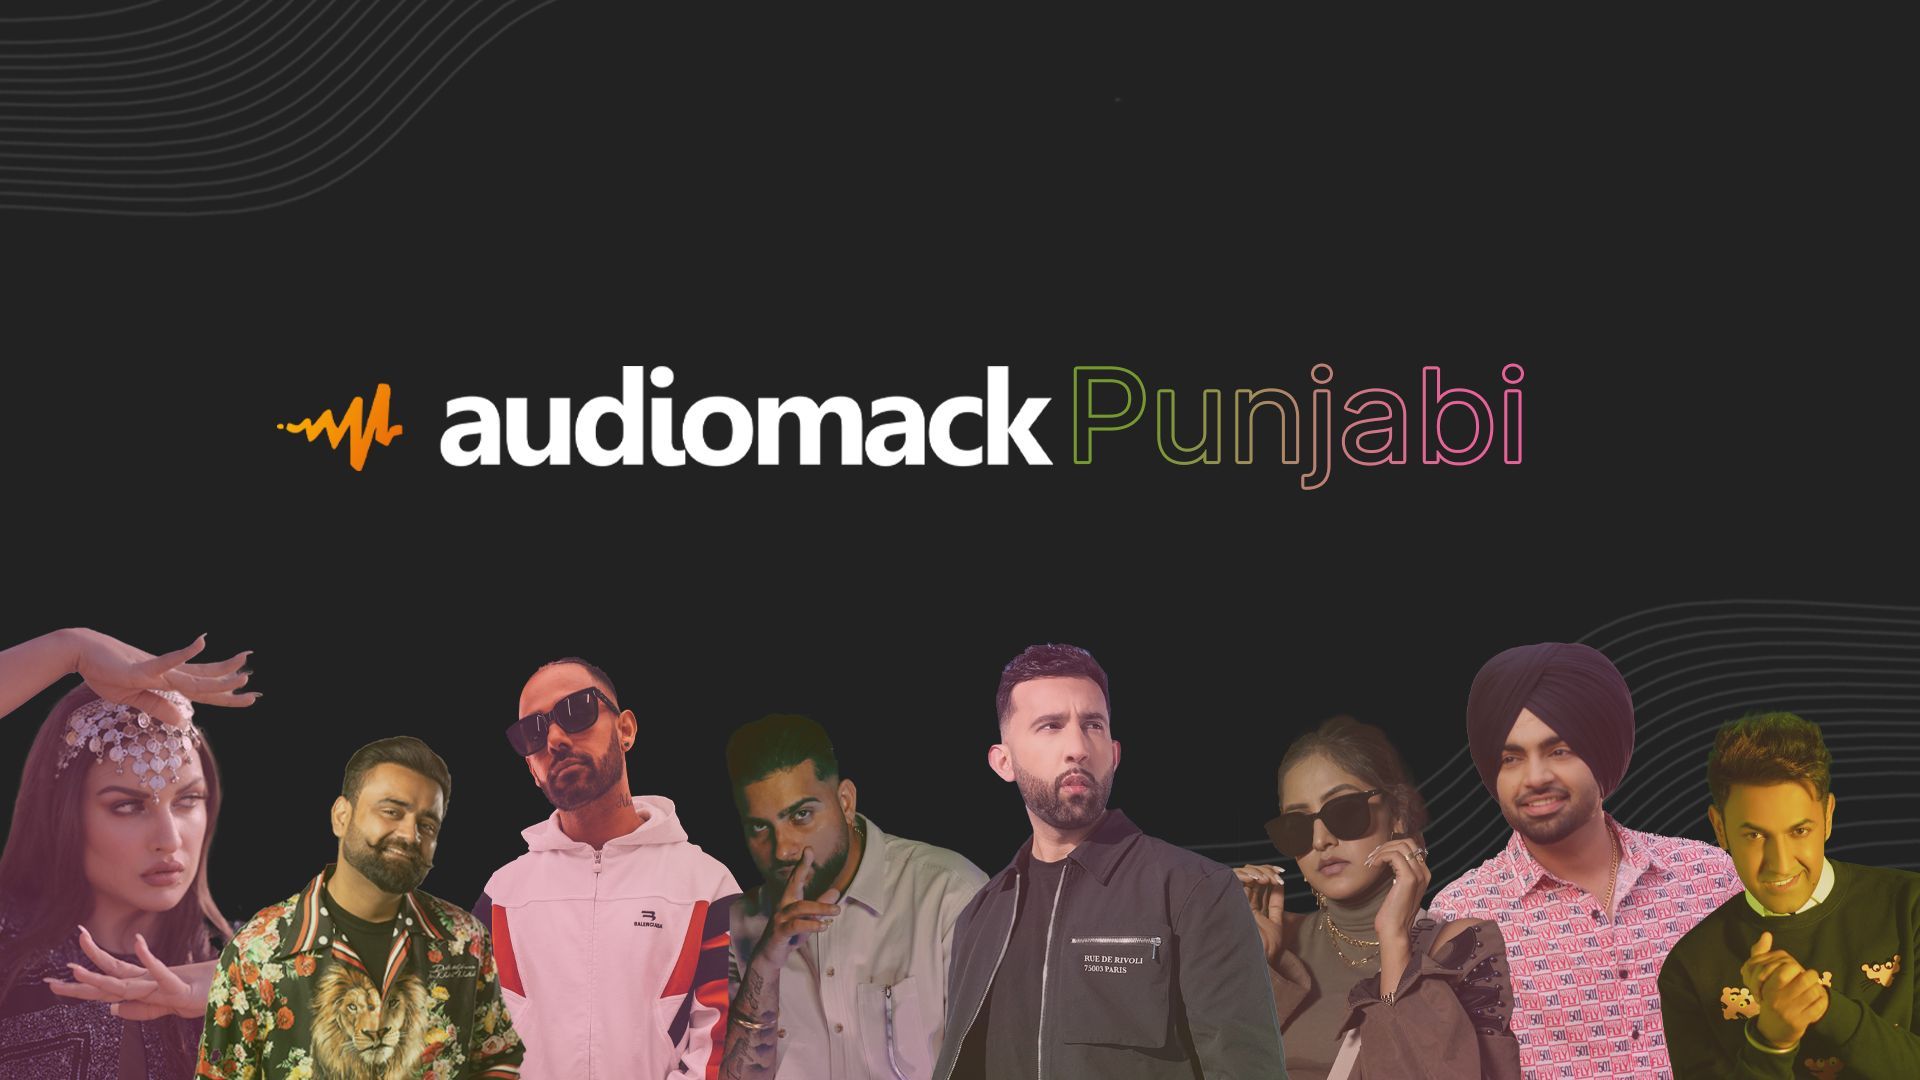 Audiomack Expands International Presence with Launch of Audiomack Punjabi